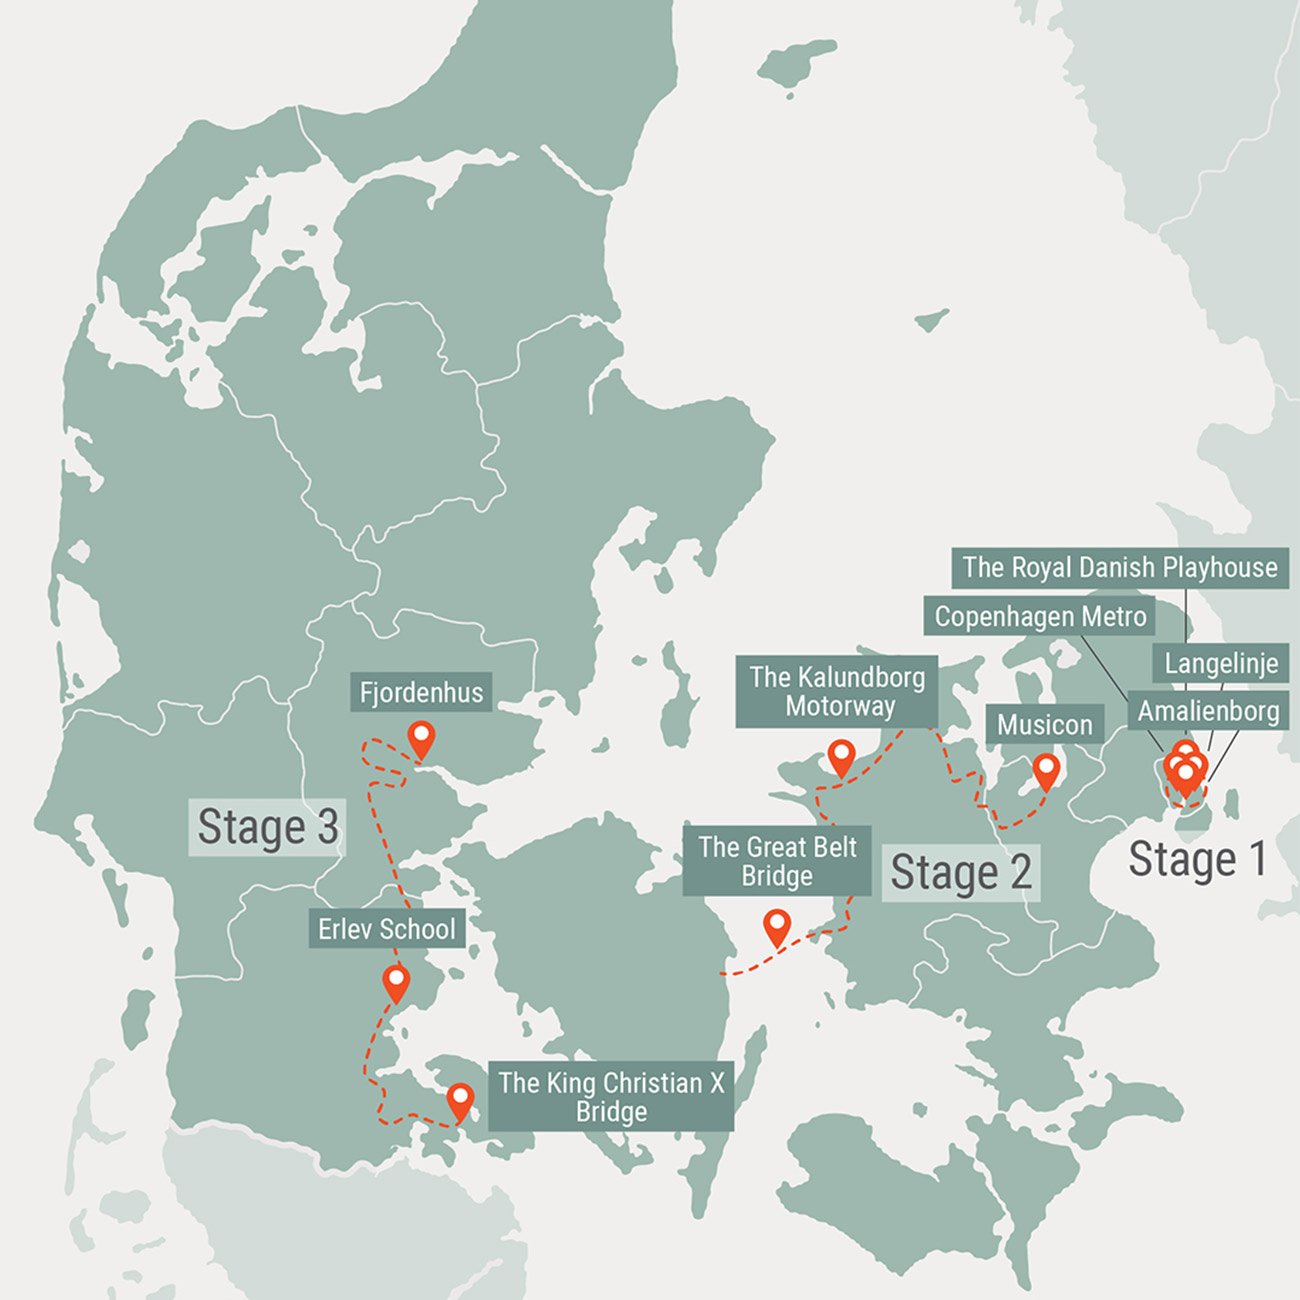 Tour de France route in Denmark map